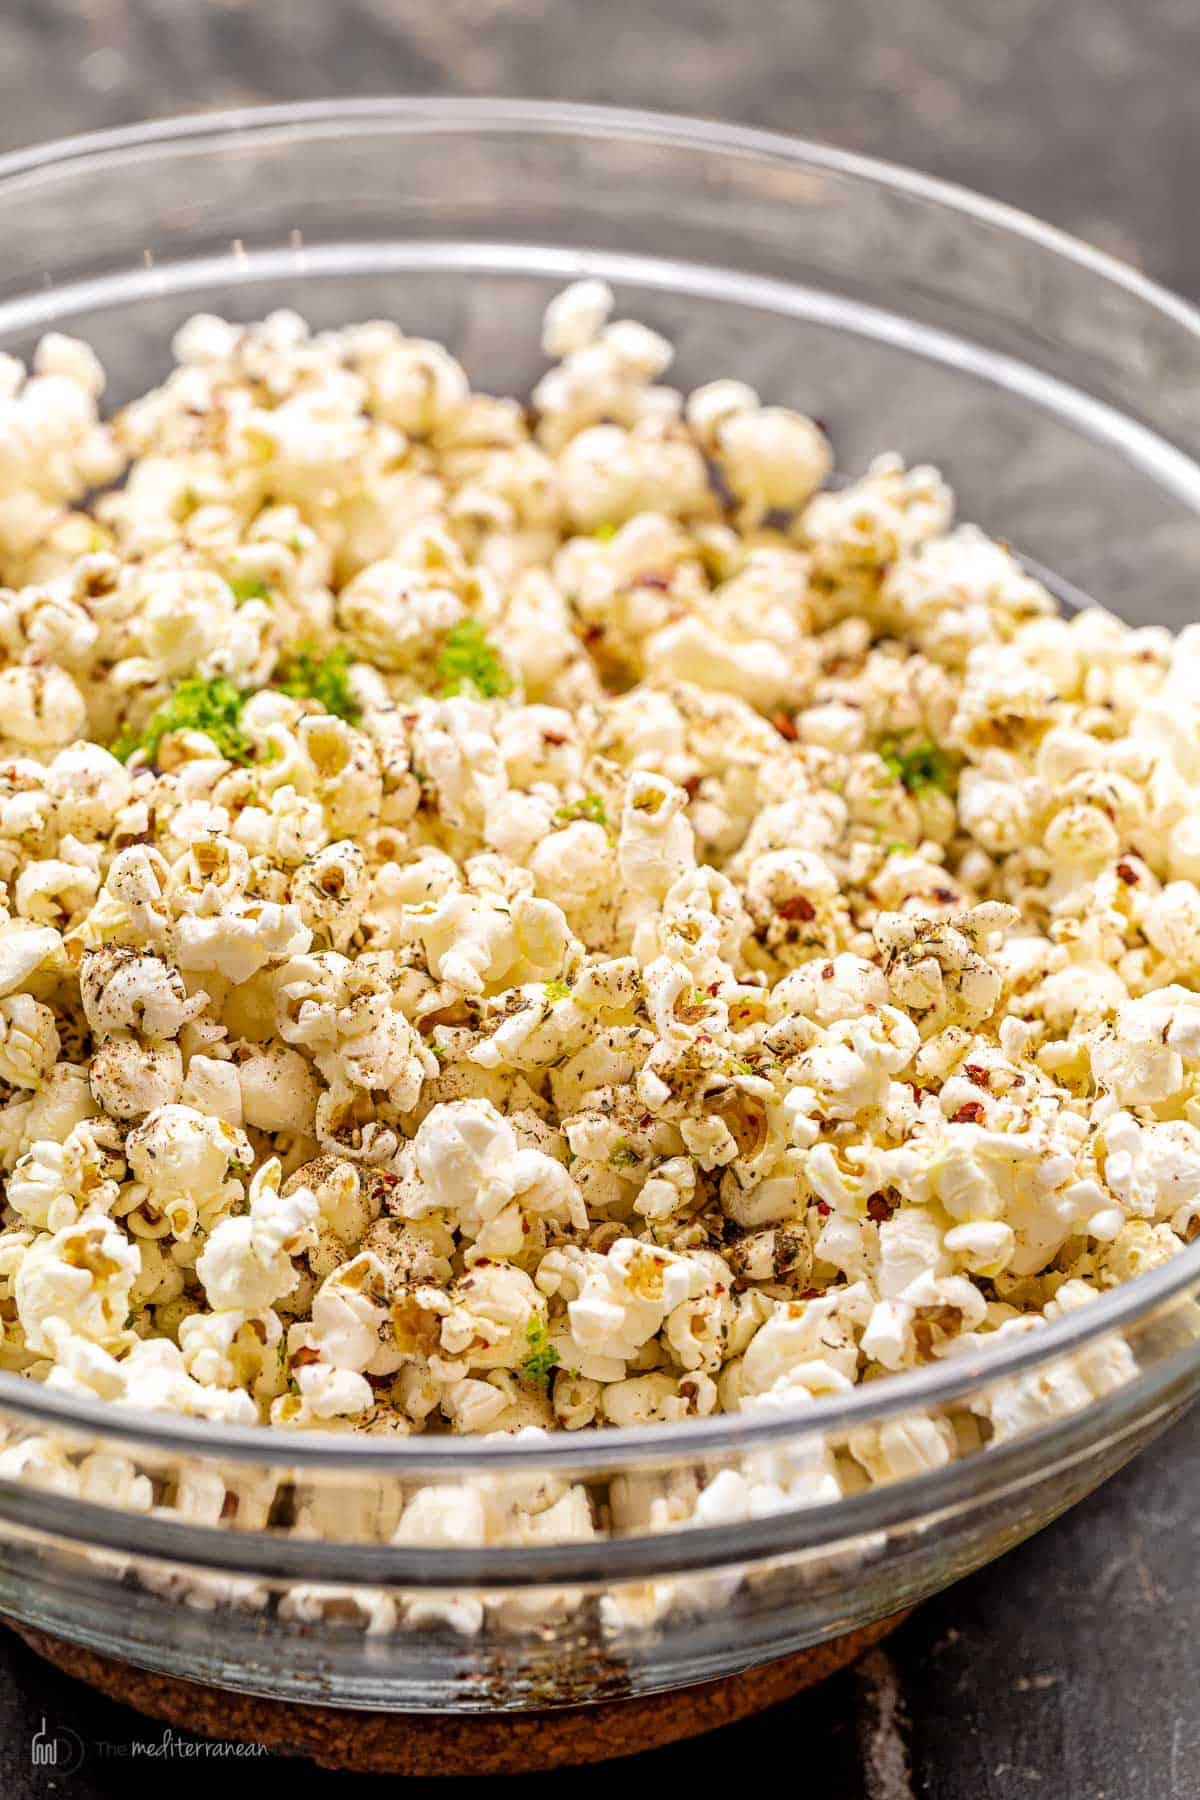 https://www.themediterraneandish.com/wp-content/uploads/2022/01/homemade-popcorn-with-zaatar-recipe-6.jpg